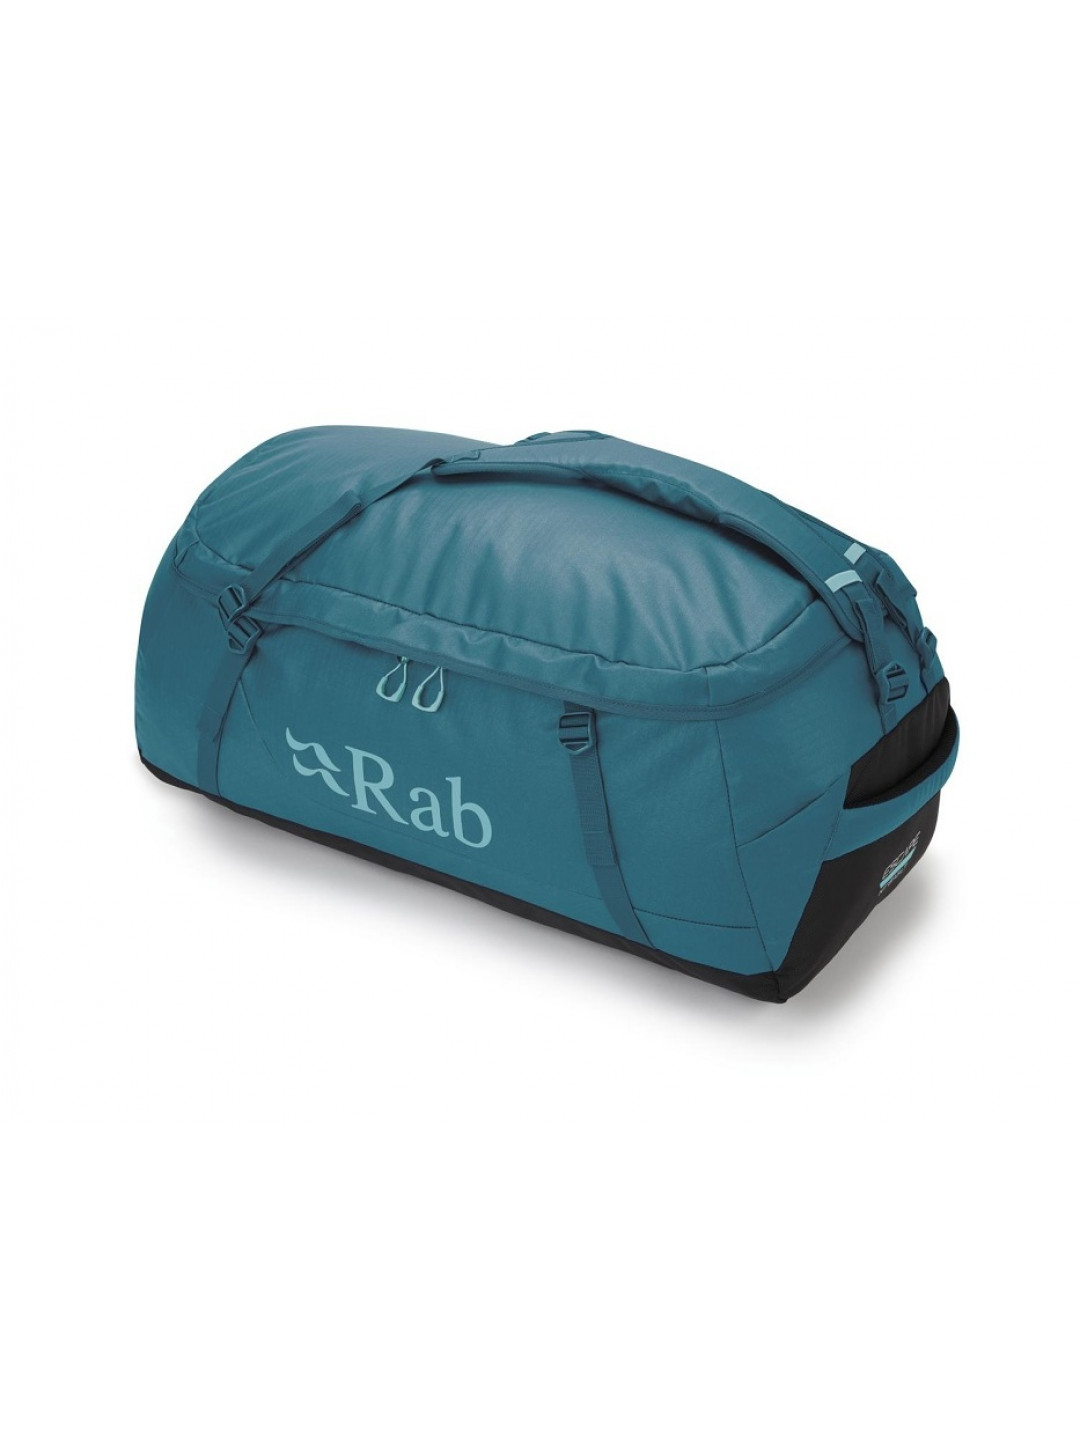 Rab Escape Kit Bag LT 30 Ultramarine